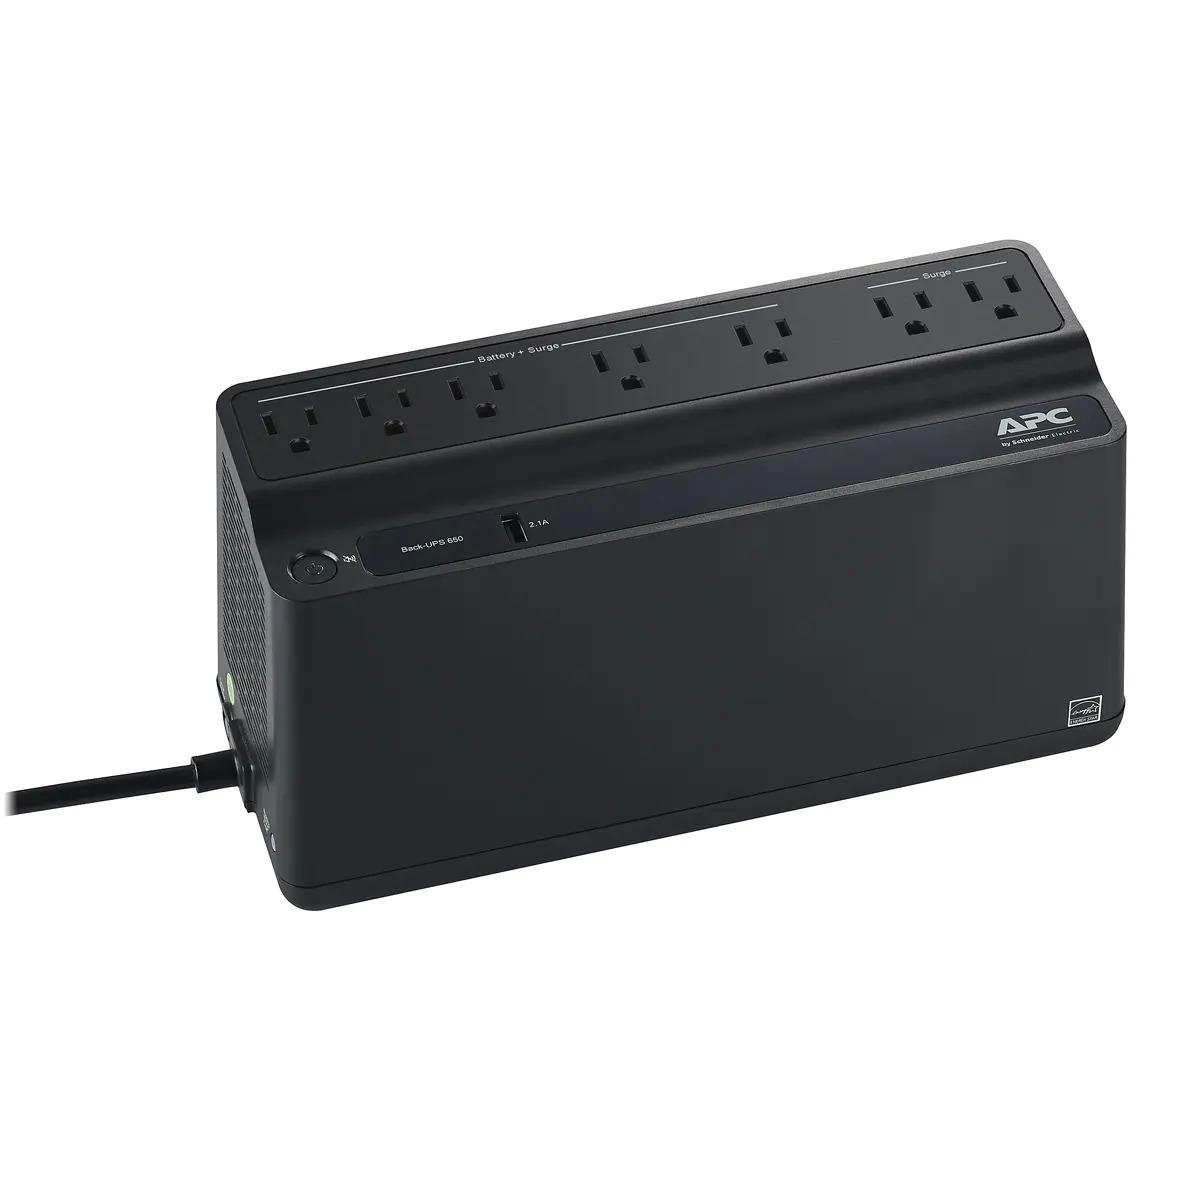 APC 650VA 7-Outlet Back-UPS Battery Backup for $47.49 Shipped